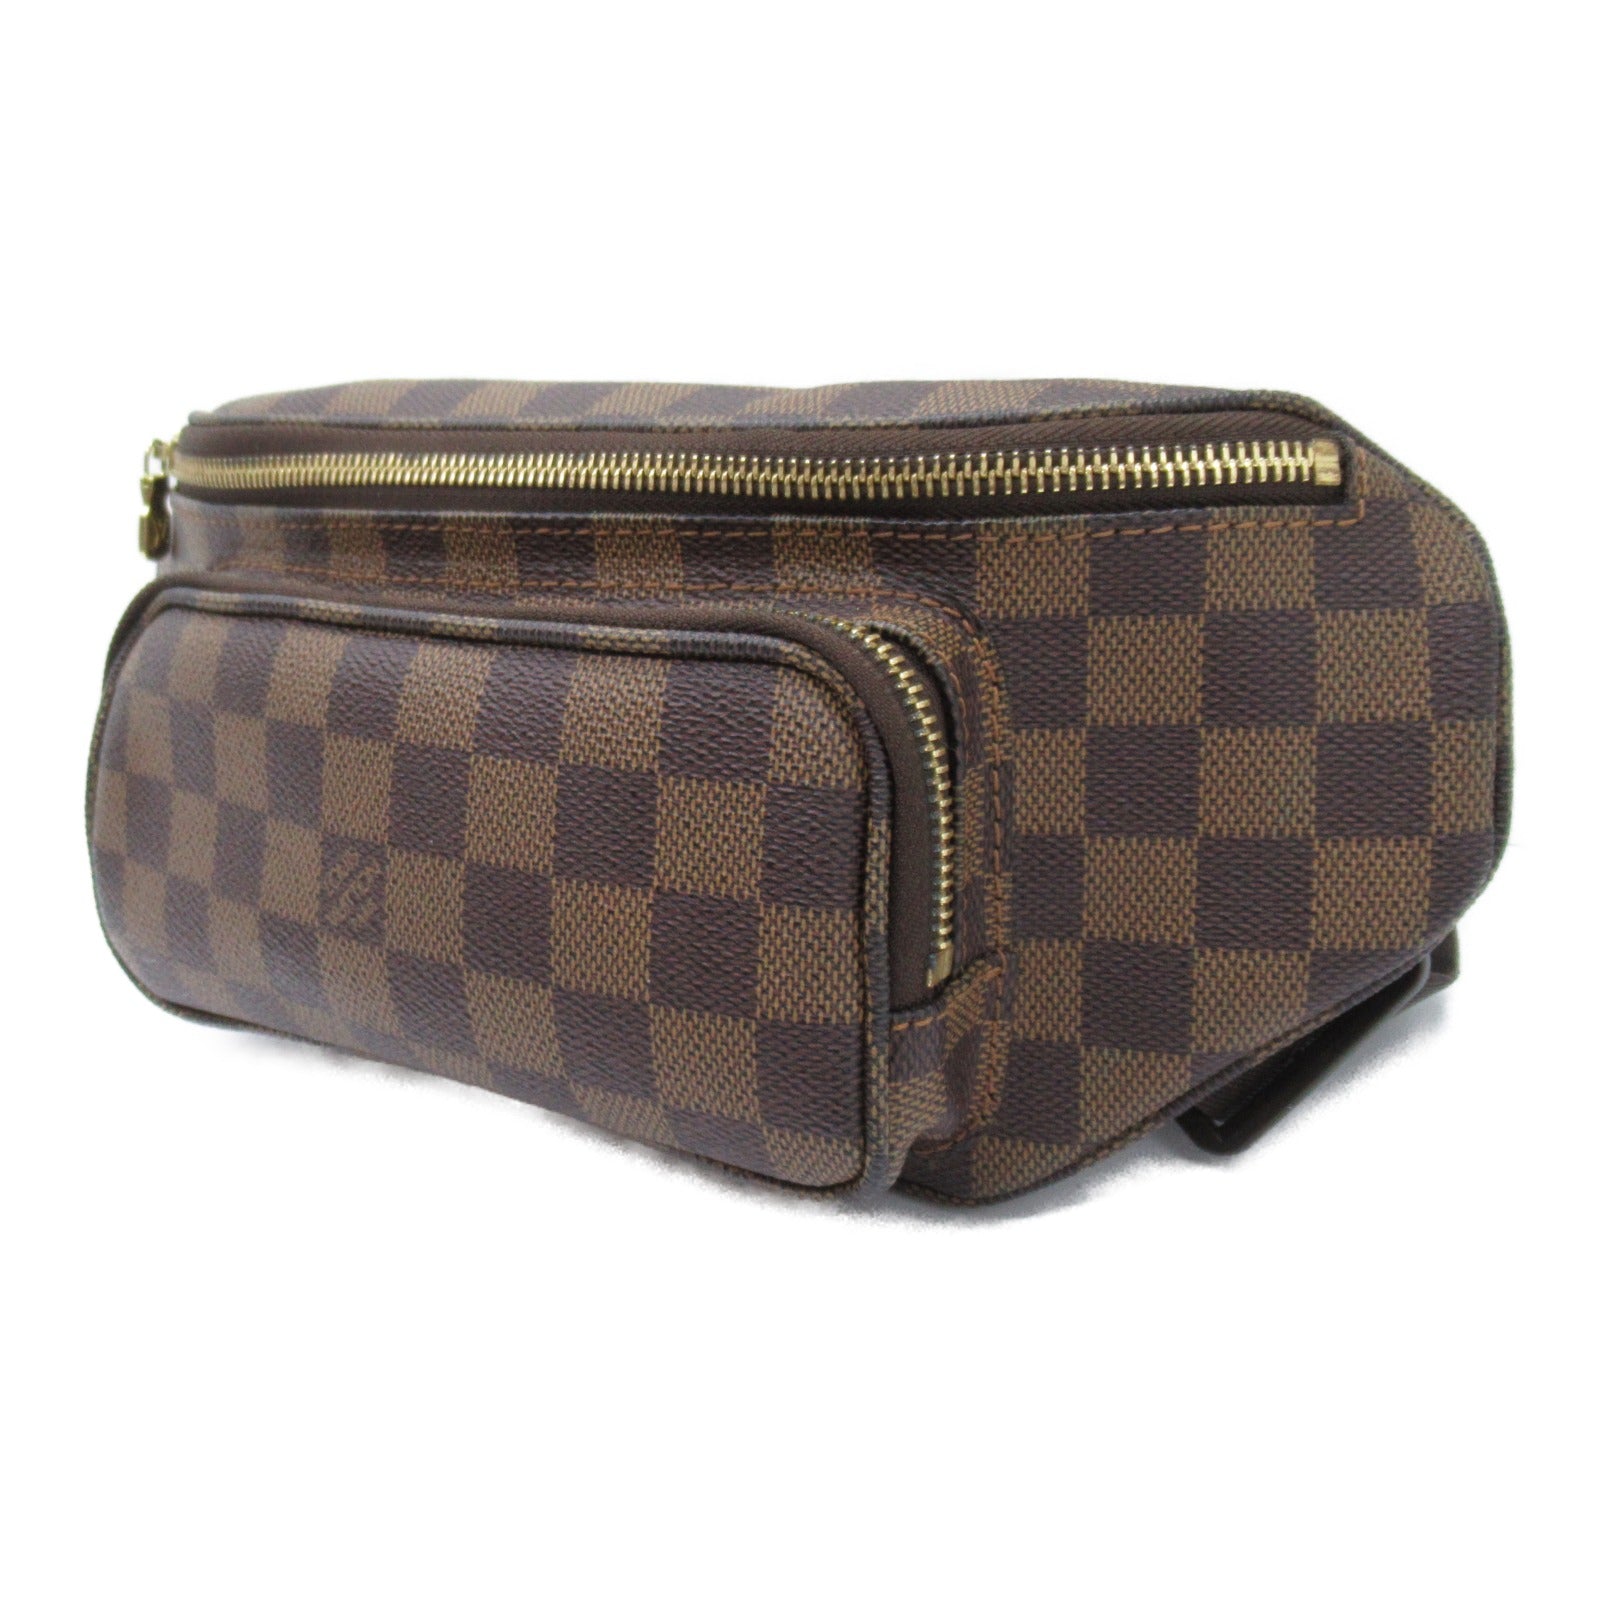 Louis Vuitton Louis Vuitton Bum Bag Melville Waist Bag Body Bag PVC Coated Canvas Damiens  Brown  N51172